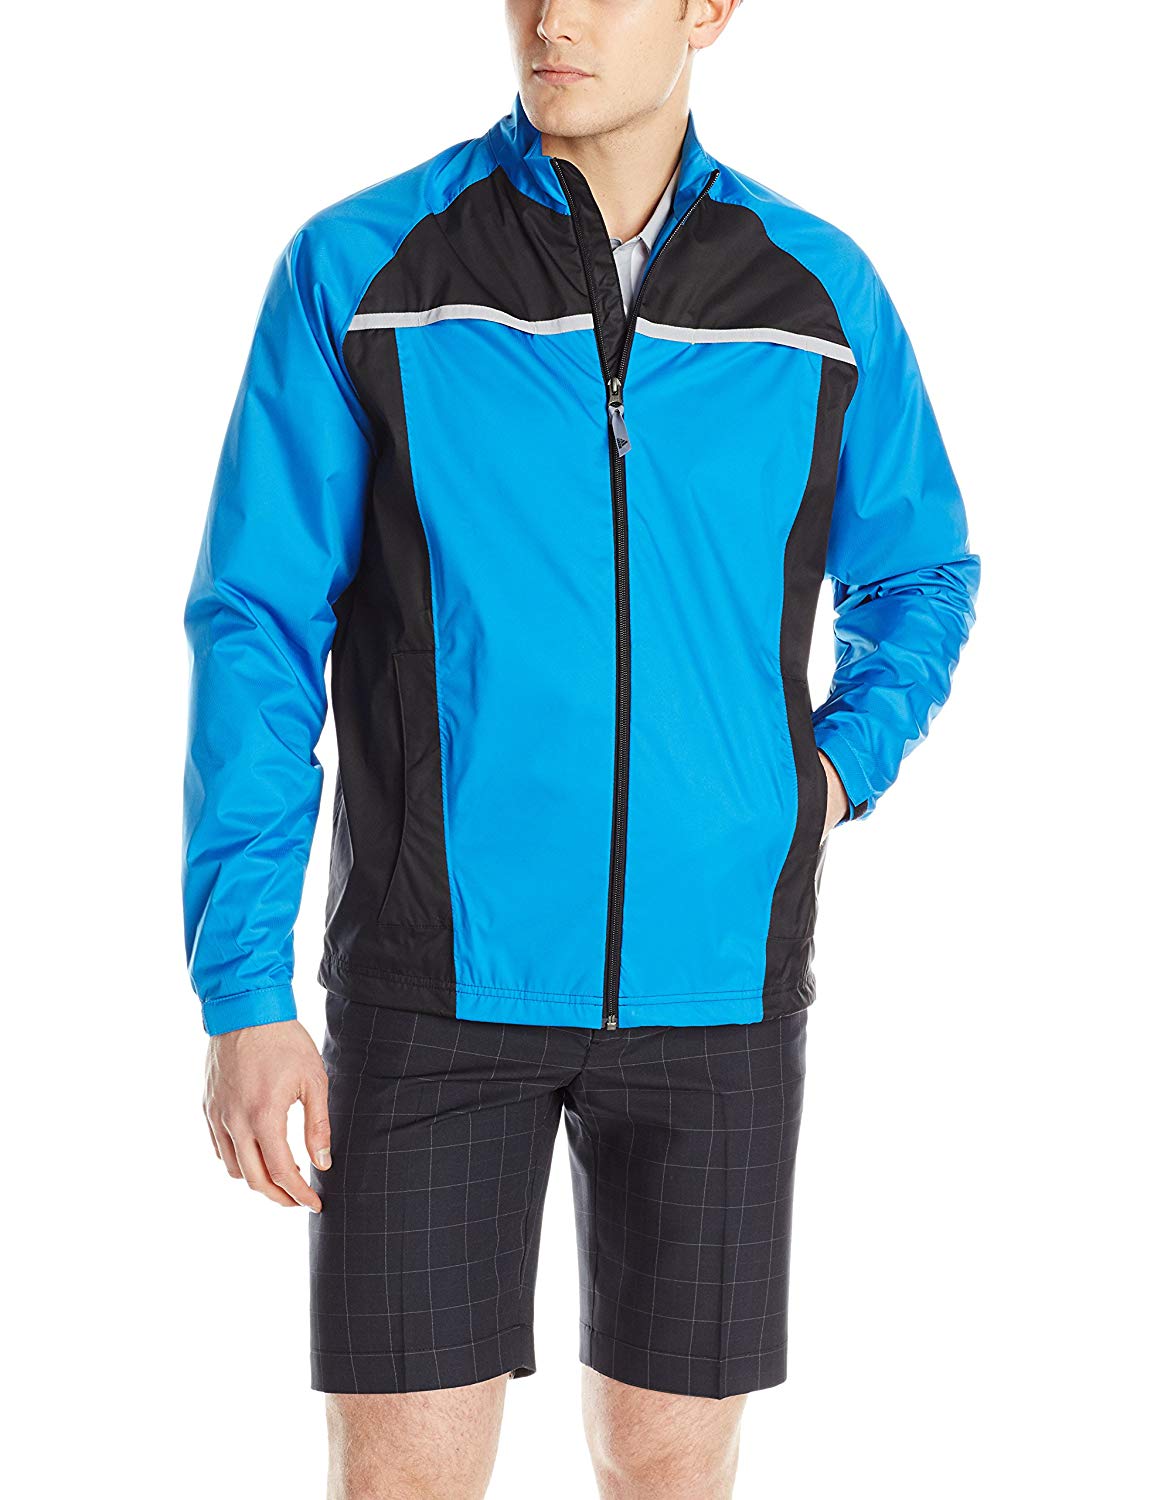 Adidas Mens Climastorm Essential Packable Rain Golf Jackets